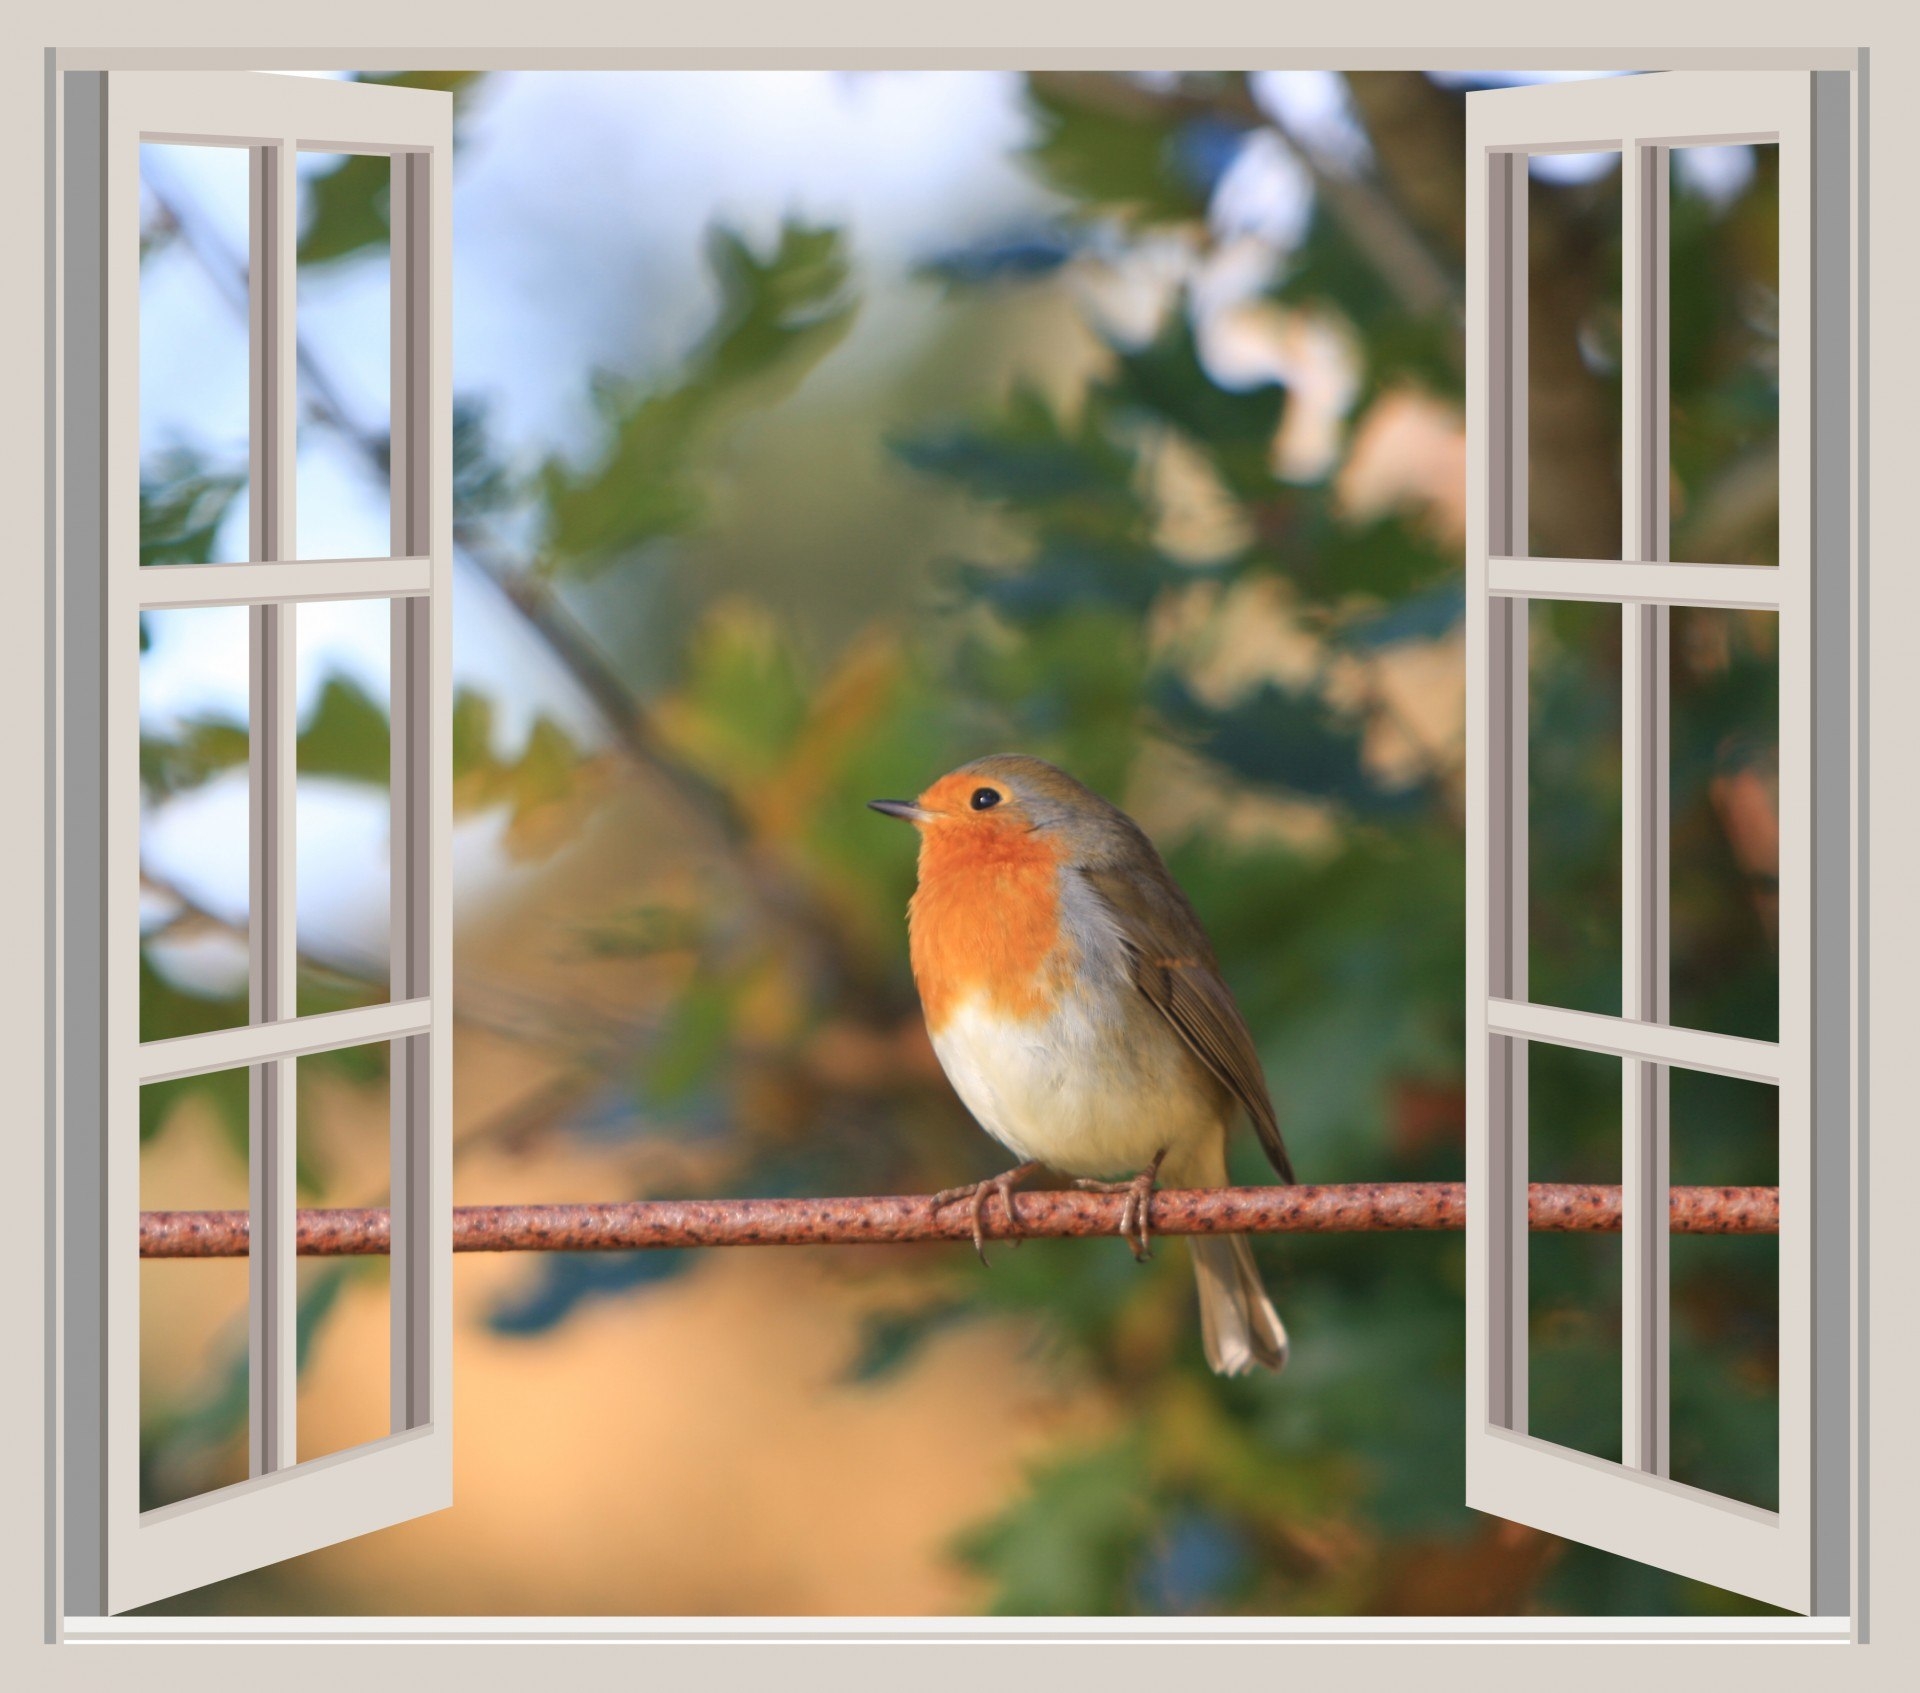 Утро стучит в окно. Птичка на подоконнике. Птицы на окна. Птички за окном.